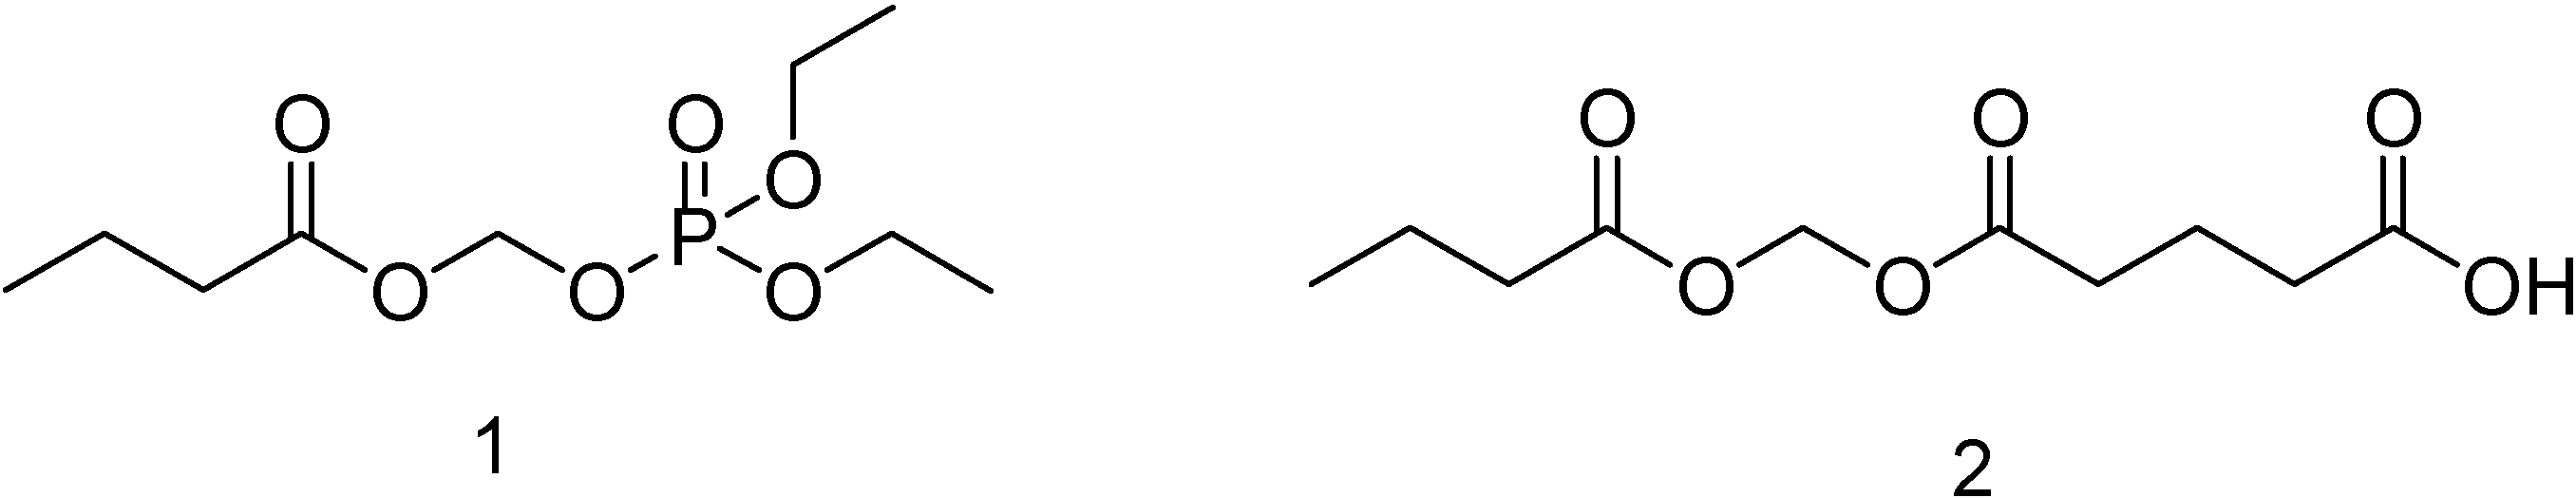 1,2-Дистеароил-SN-глицеро-3-фосфохолин (DSPC). 2-Бромбензойная кислота. Аспарагиновая кислота +2naoh. Трифенилфосфат формула. Коа лак